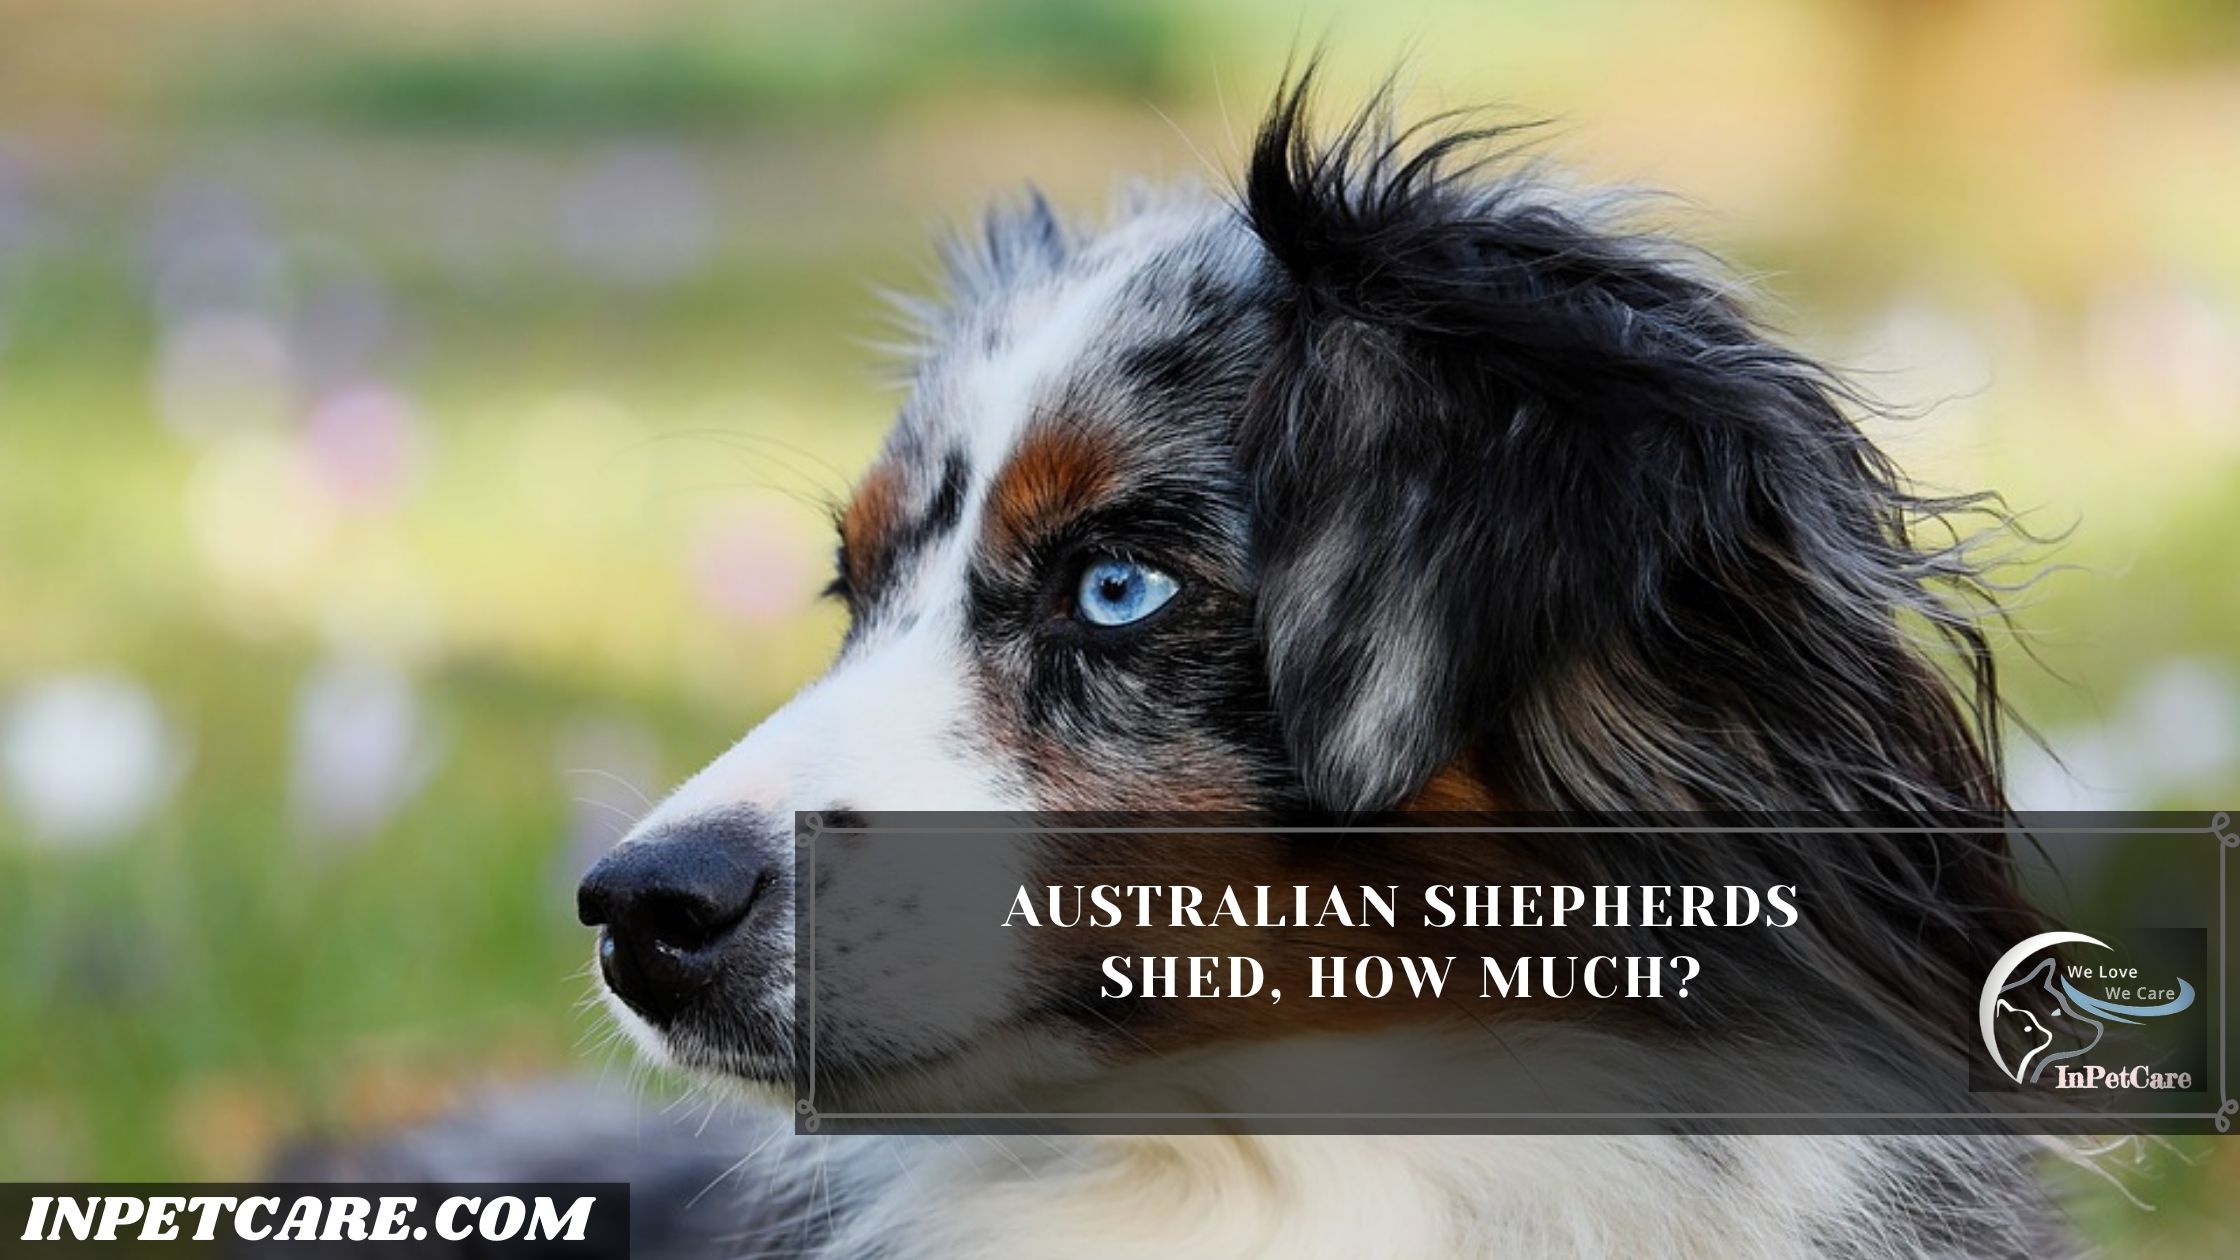 Are Australian Shepherds Hypoallergenic?